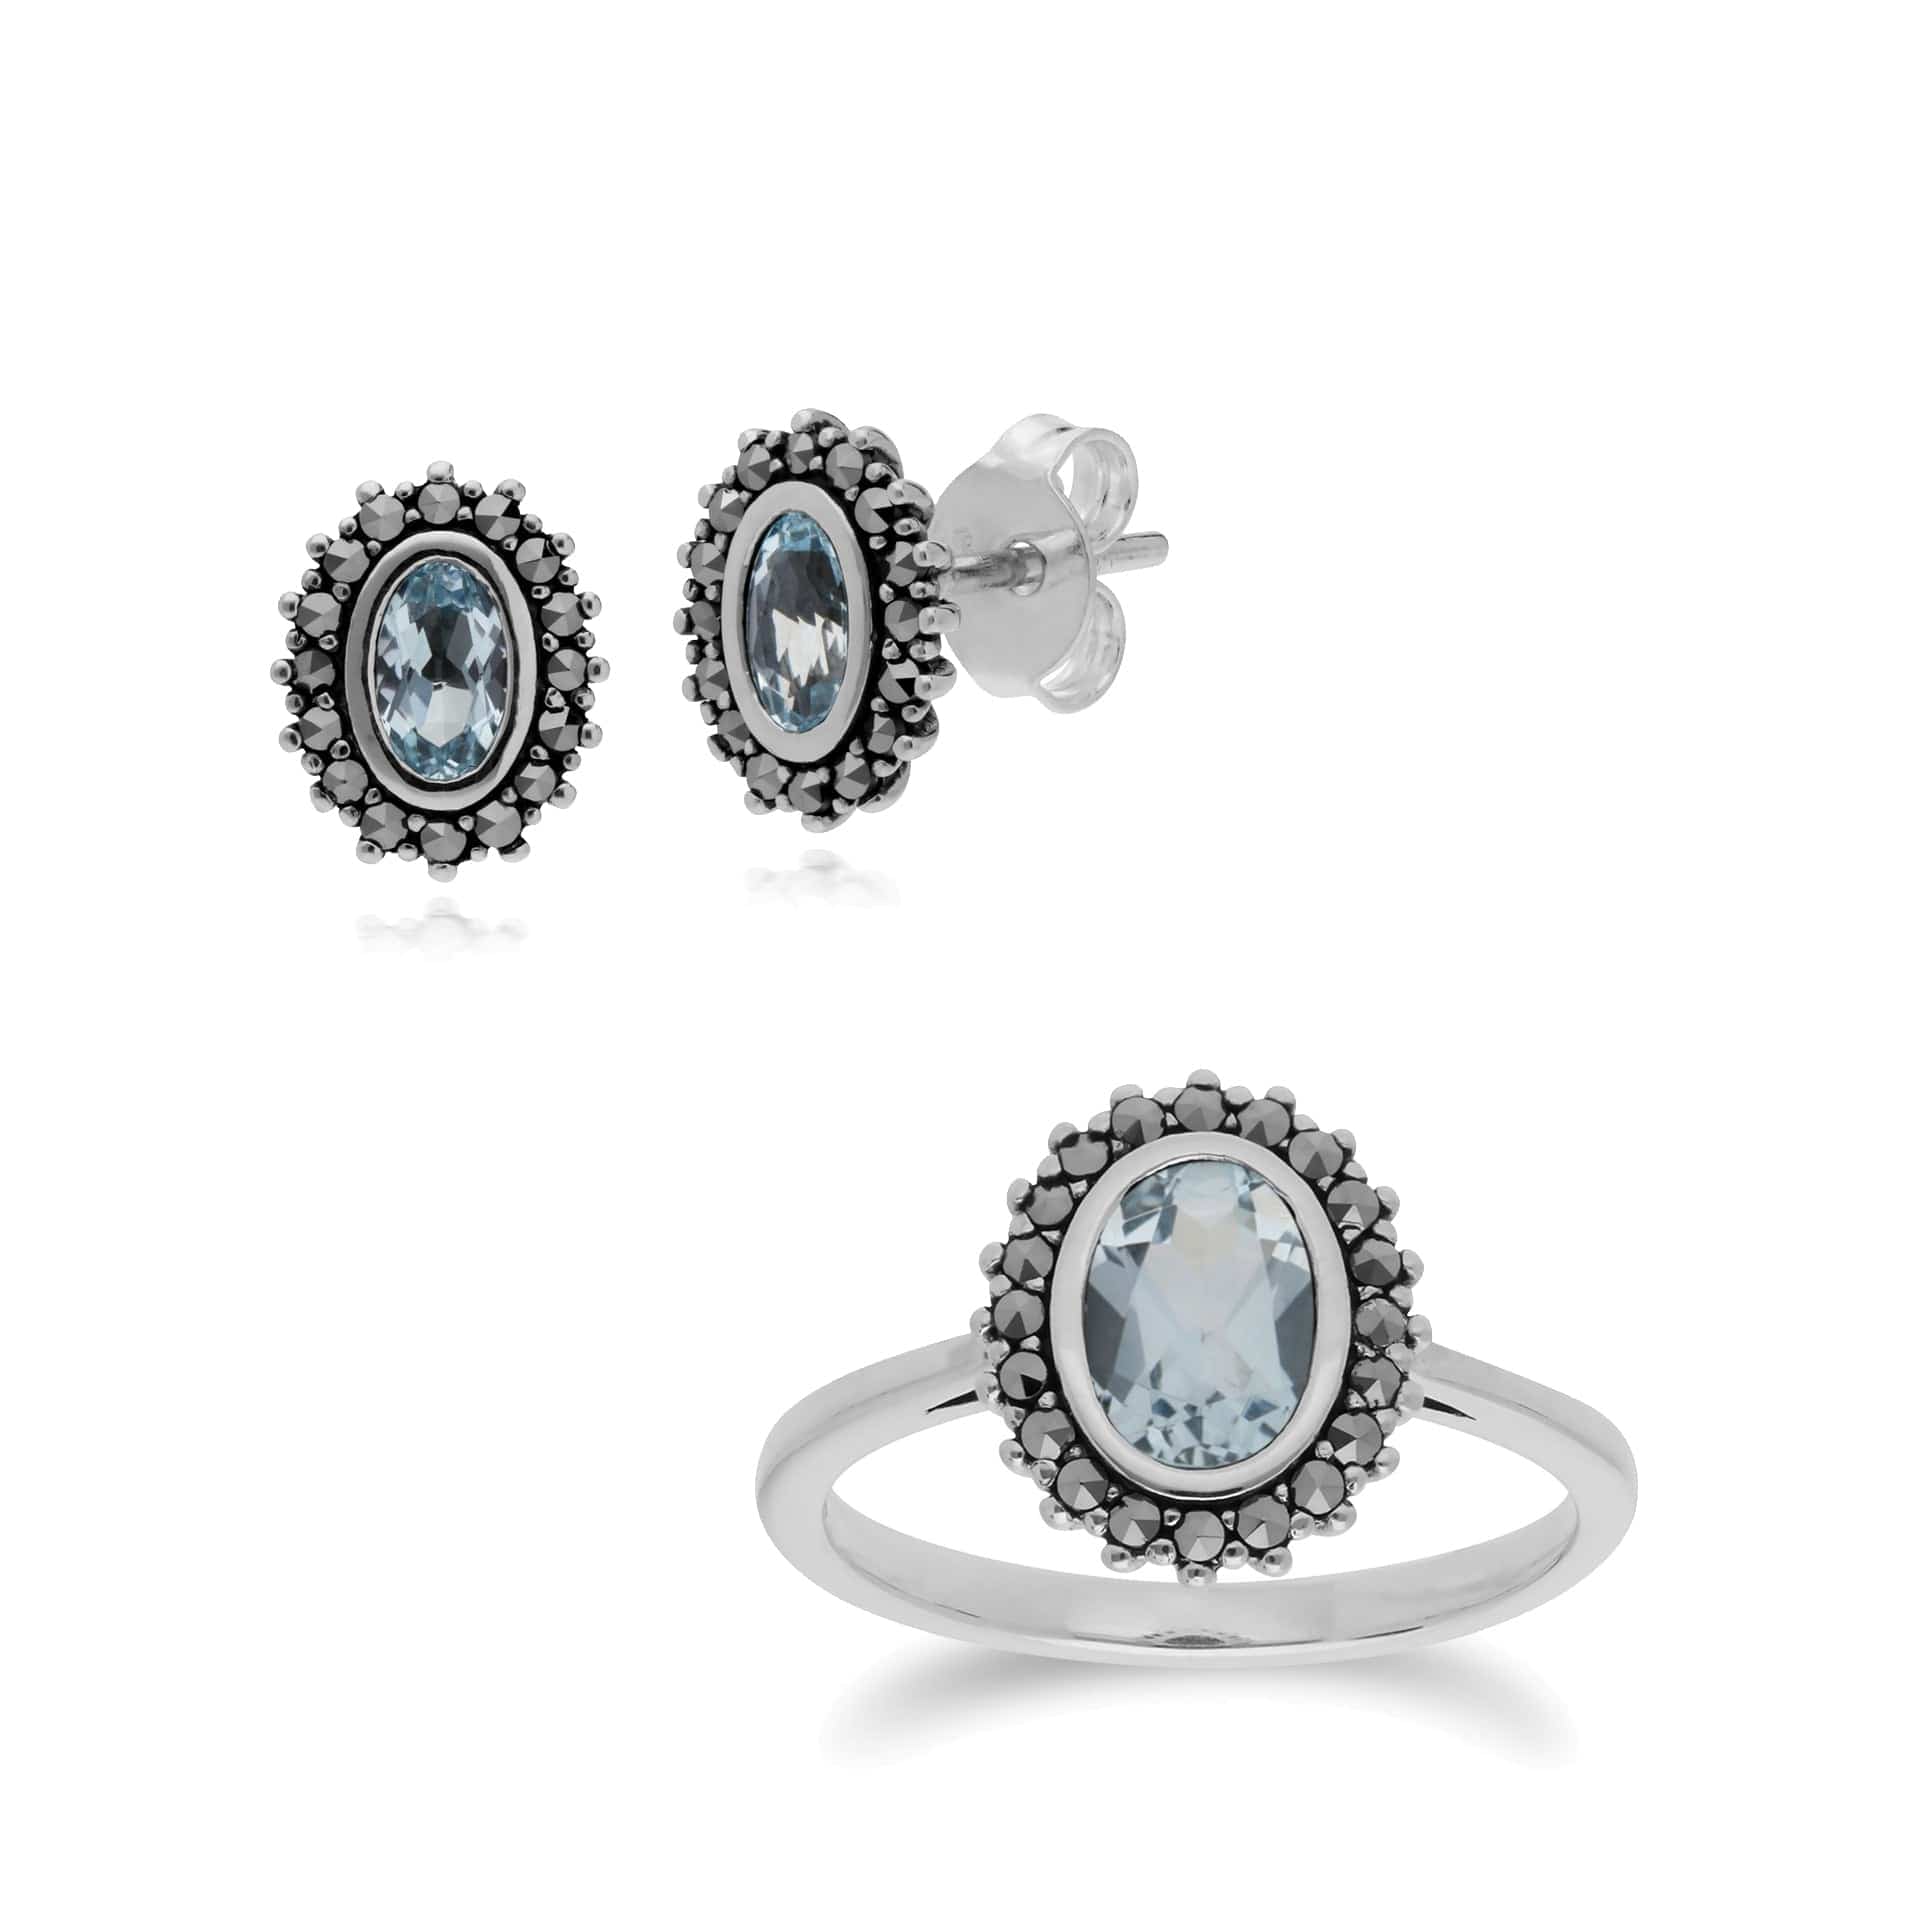 214E860901925-214R599701925 Art Deco Style Oval Blue Topaz & Marcasite Halo Stud Earrings & Ring Set in 925 Sterling Silver 1